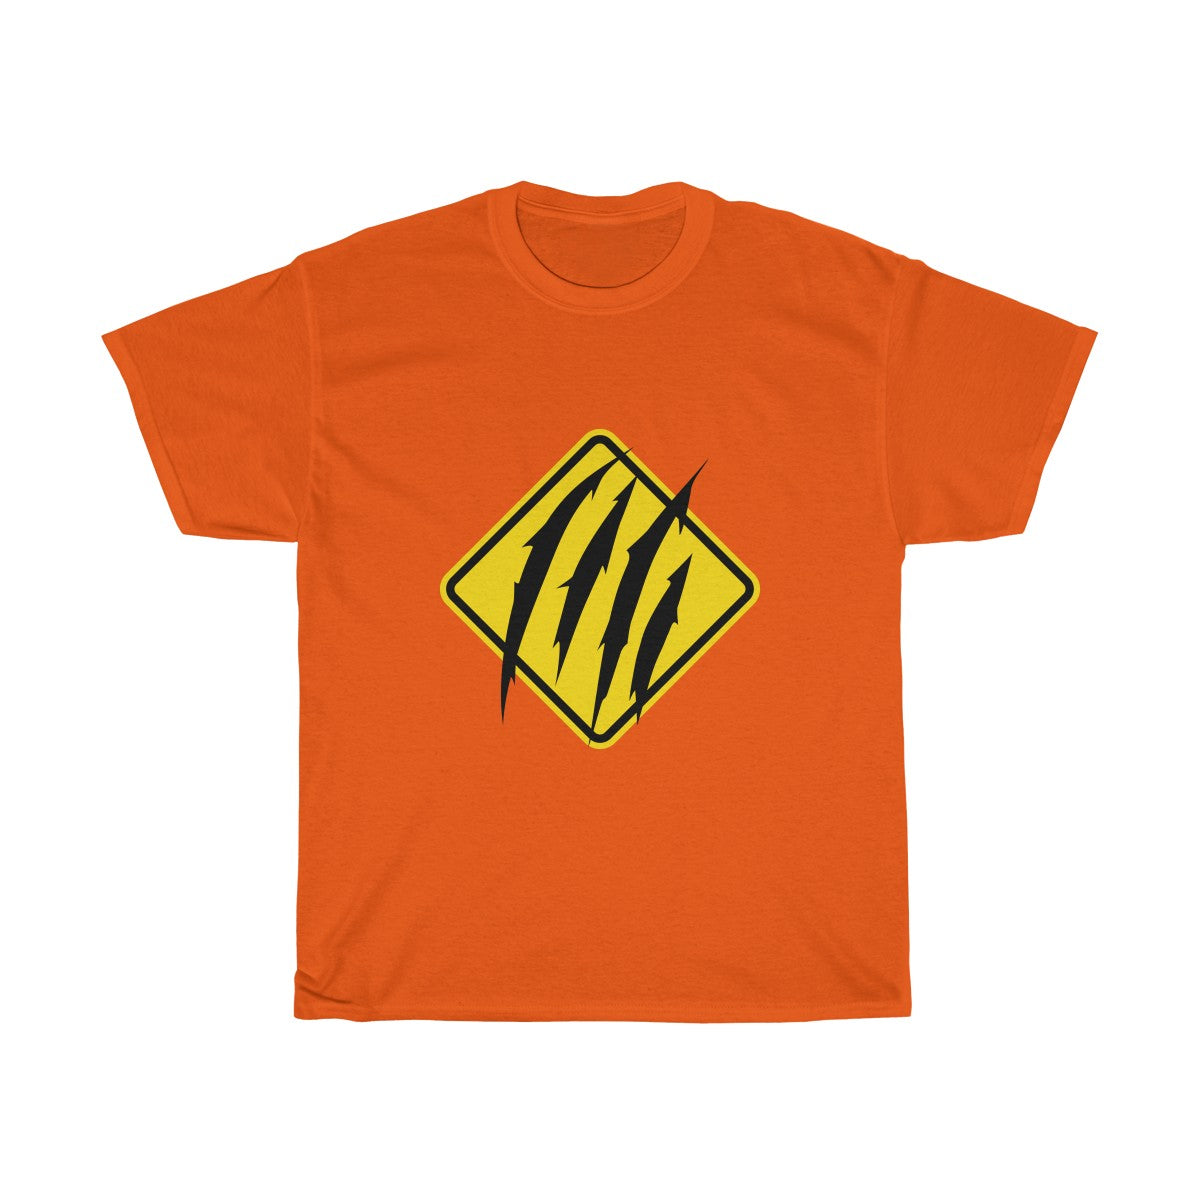 Scratch Warning - T-Shirt T-Shirt Wexon Orange S 